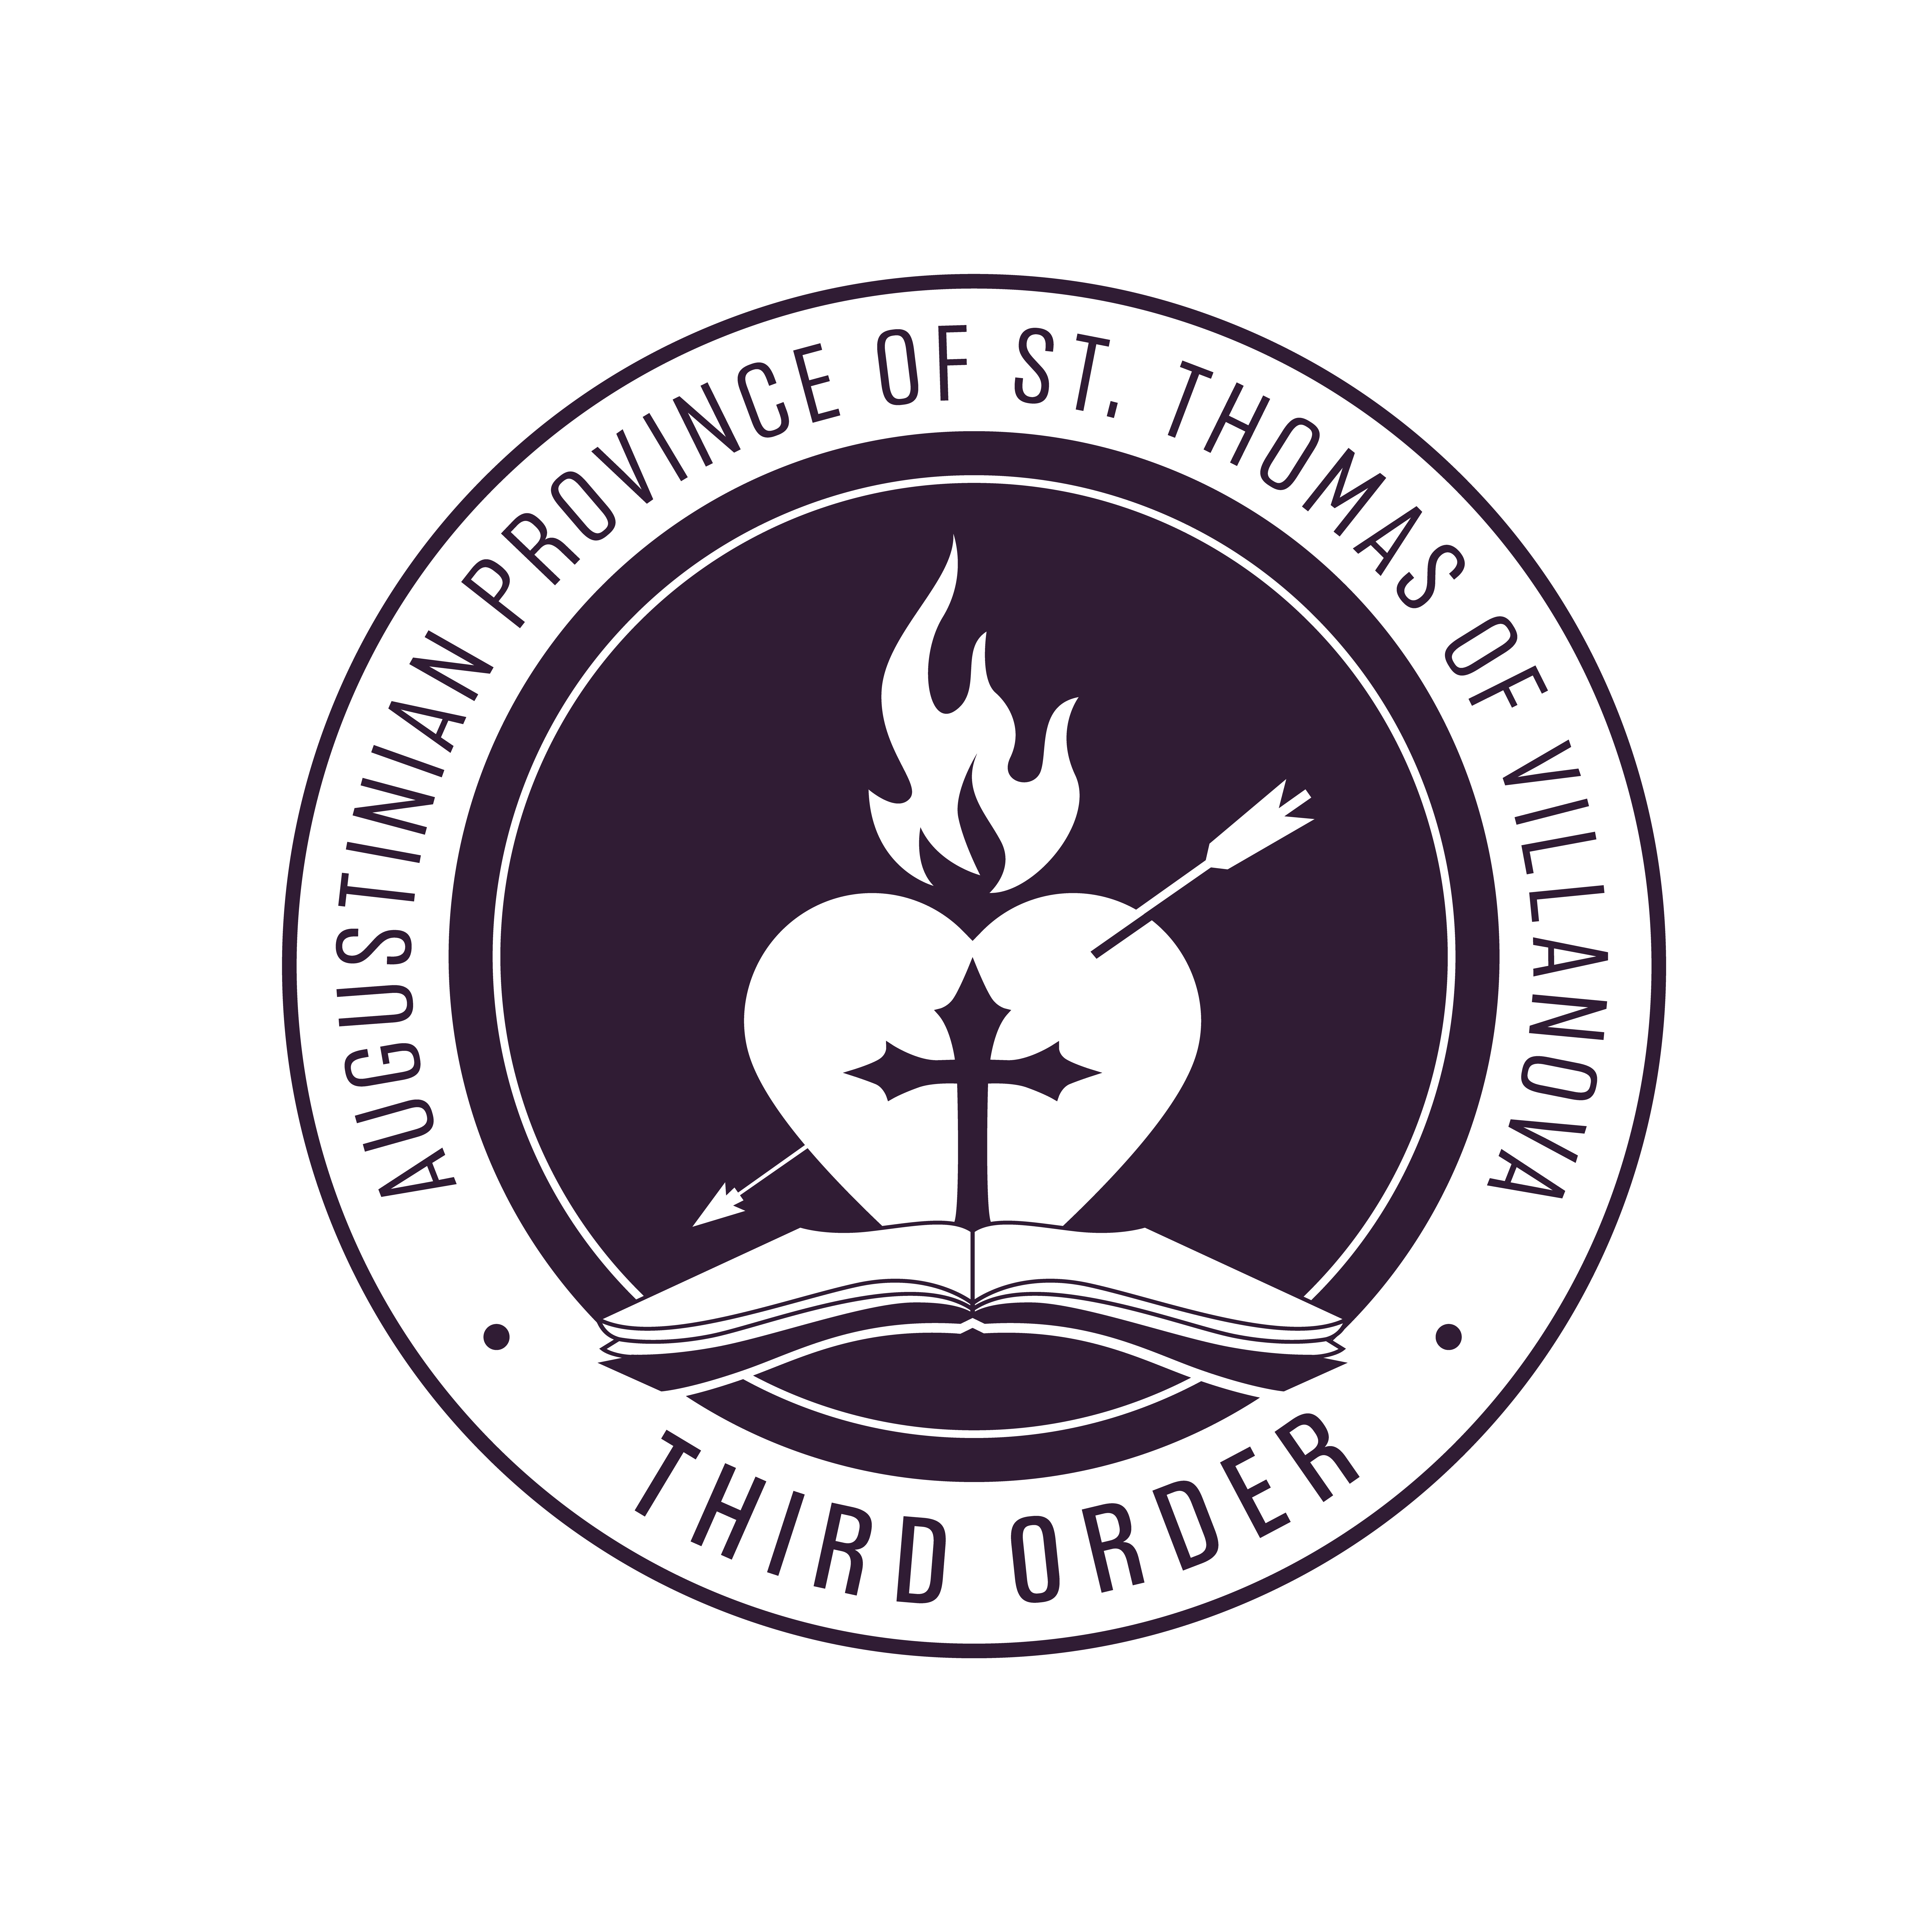 Augustinian Province of St. Thomas of Villanova Third Order Lay Fraternity logo